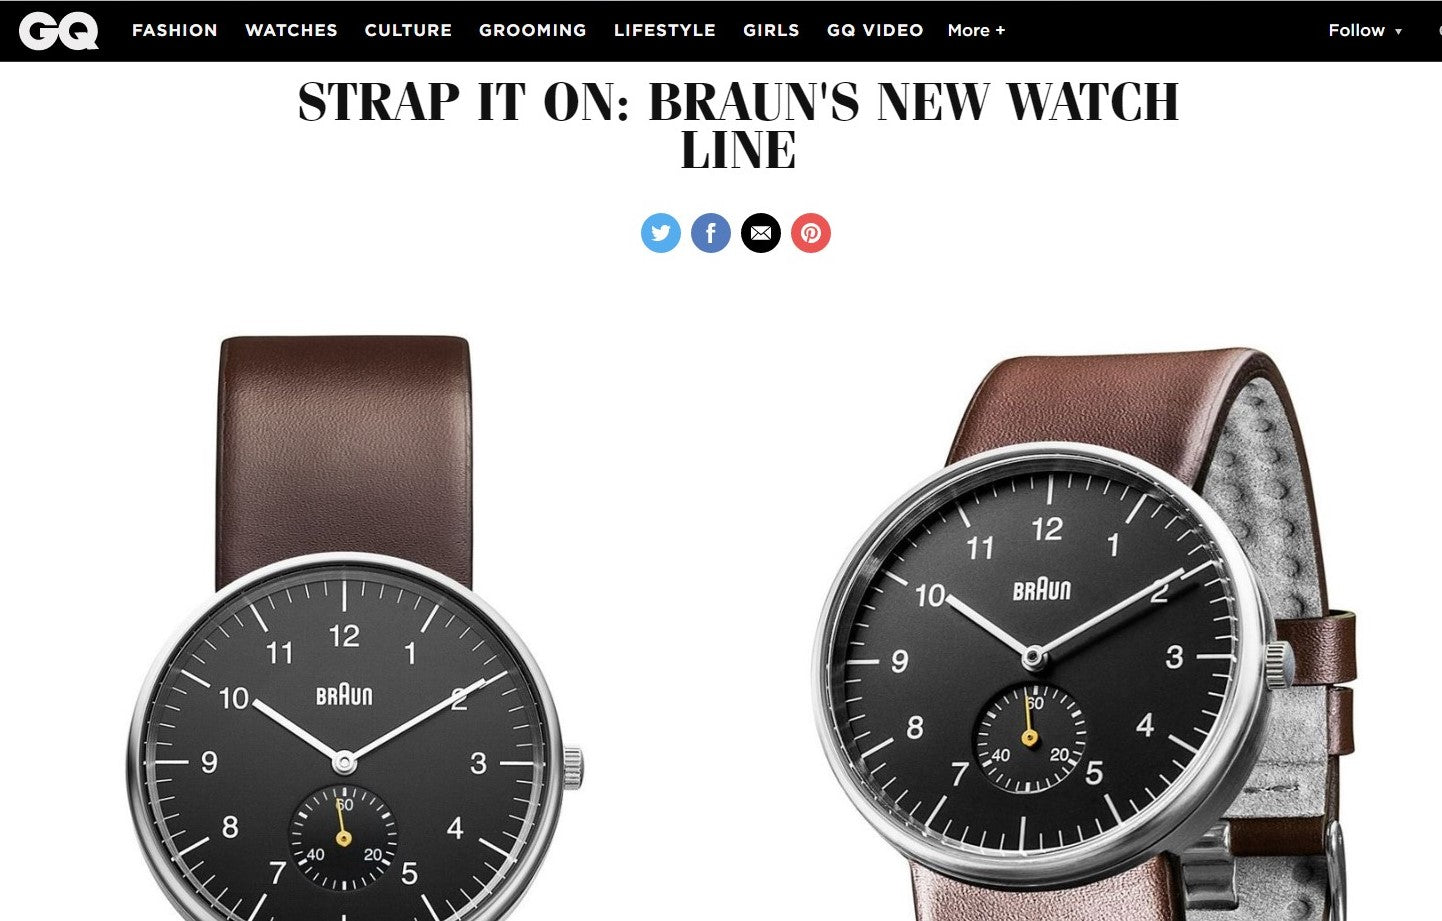 Braun New Watch Line on GQ